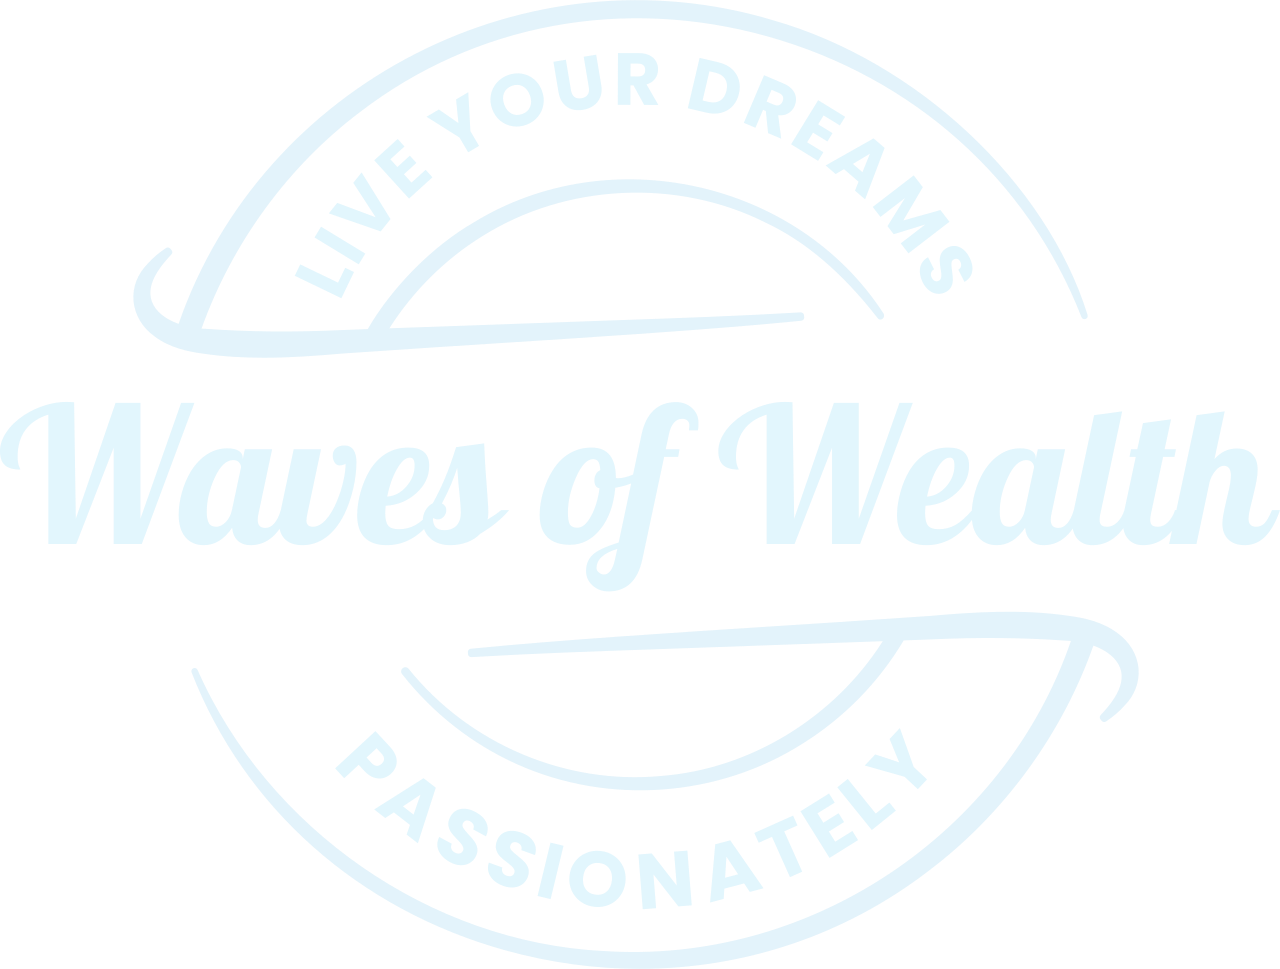 Waves of Wealth's logo